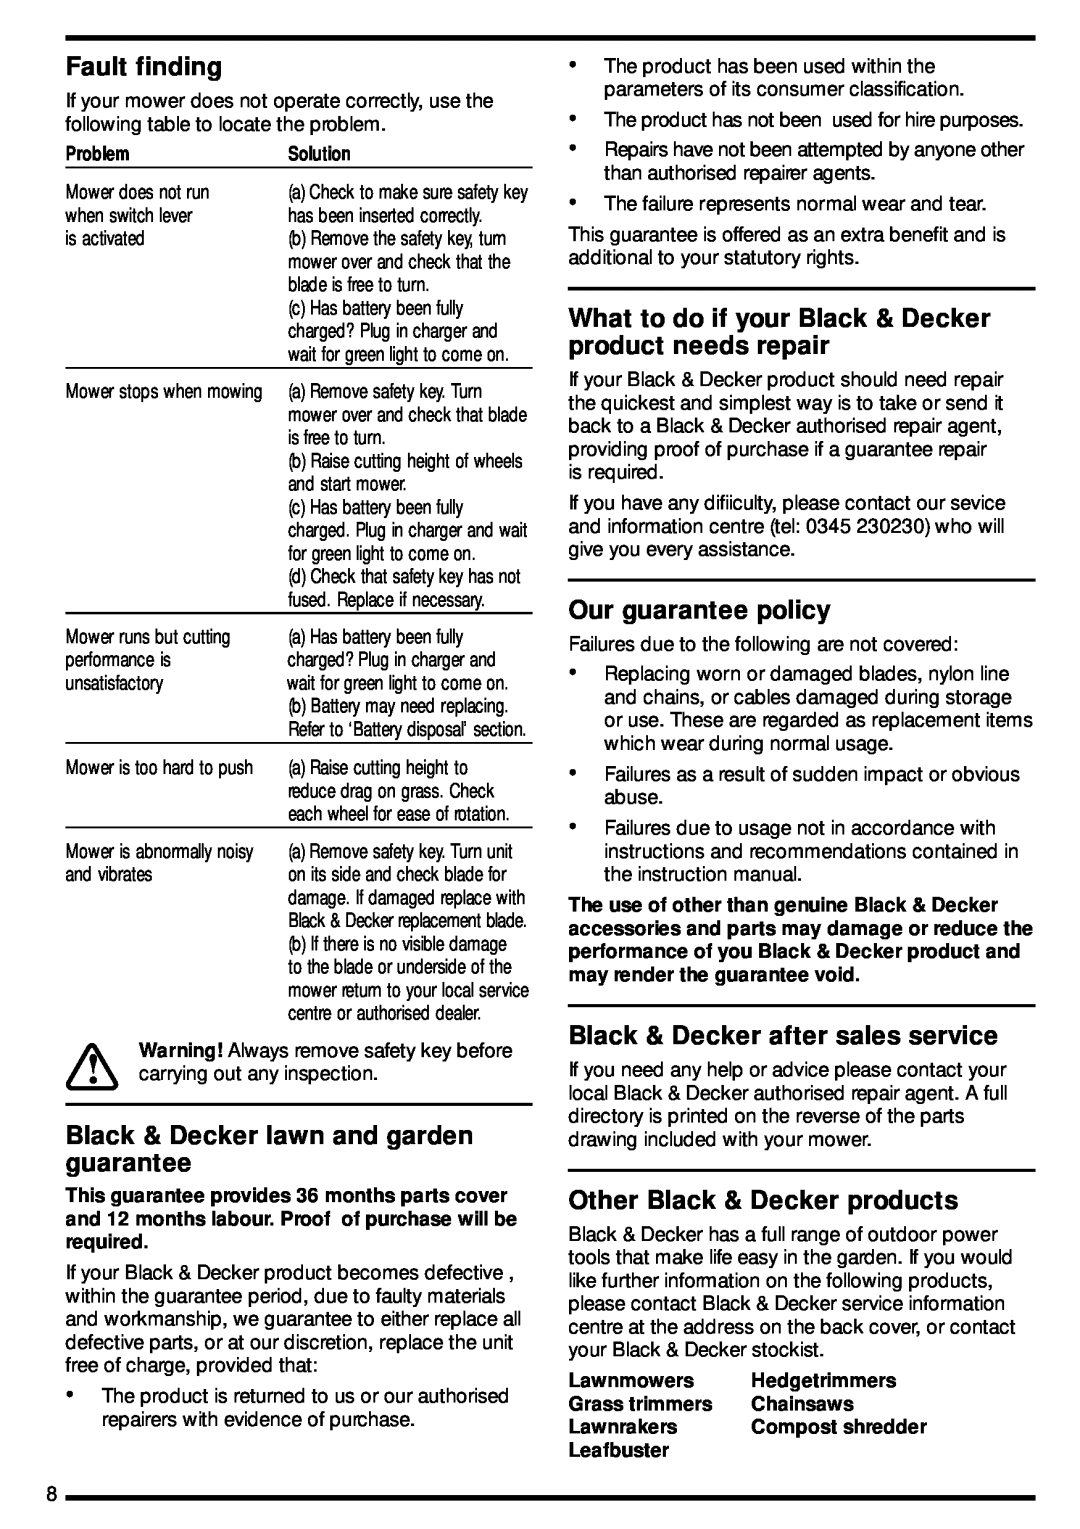 Black & Decker GRC730 manual Fault finding, Black & Decker lawn and garden guarantee, Our guarantee policy 